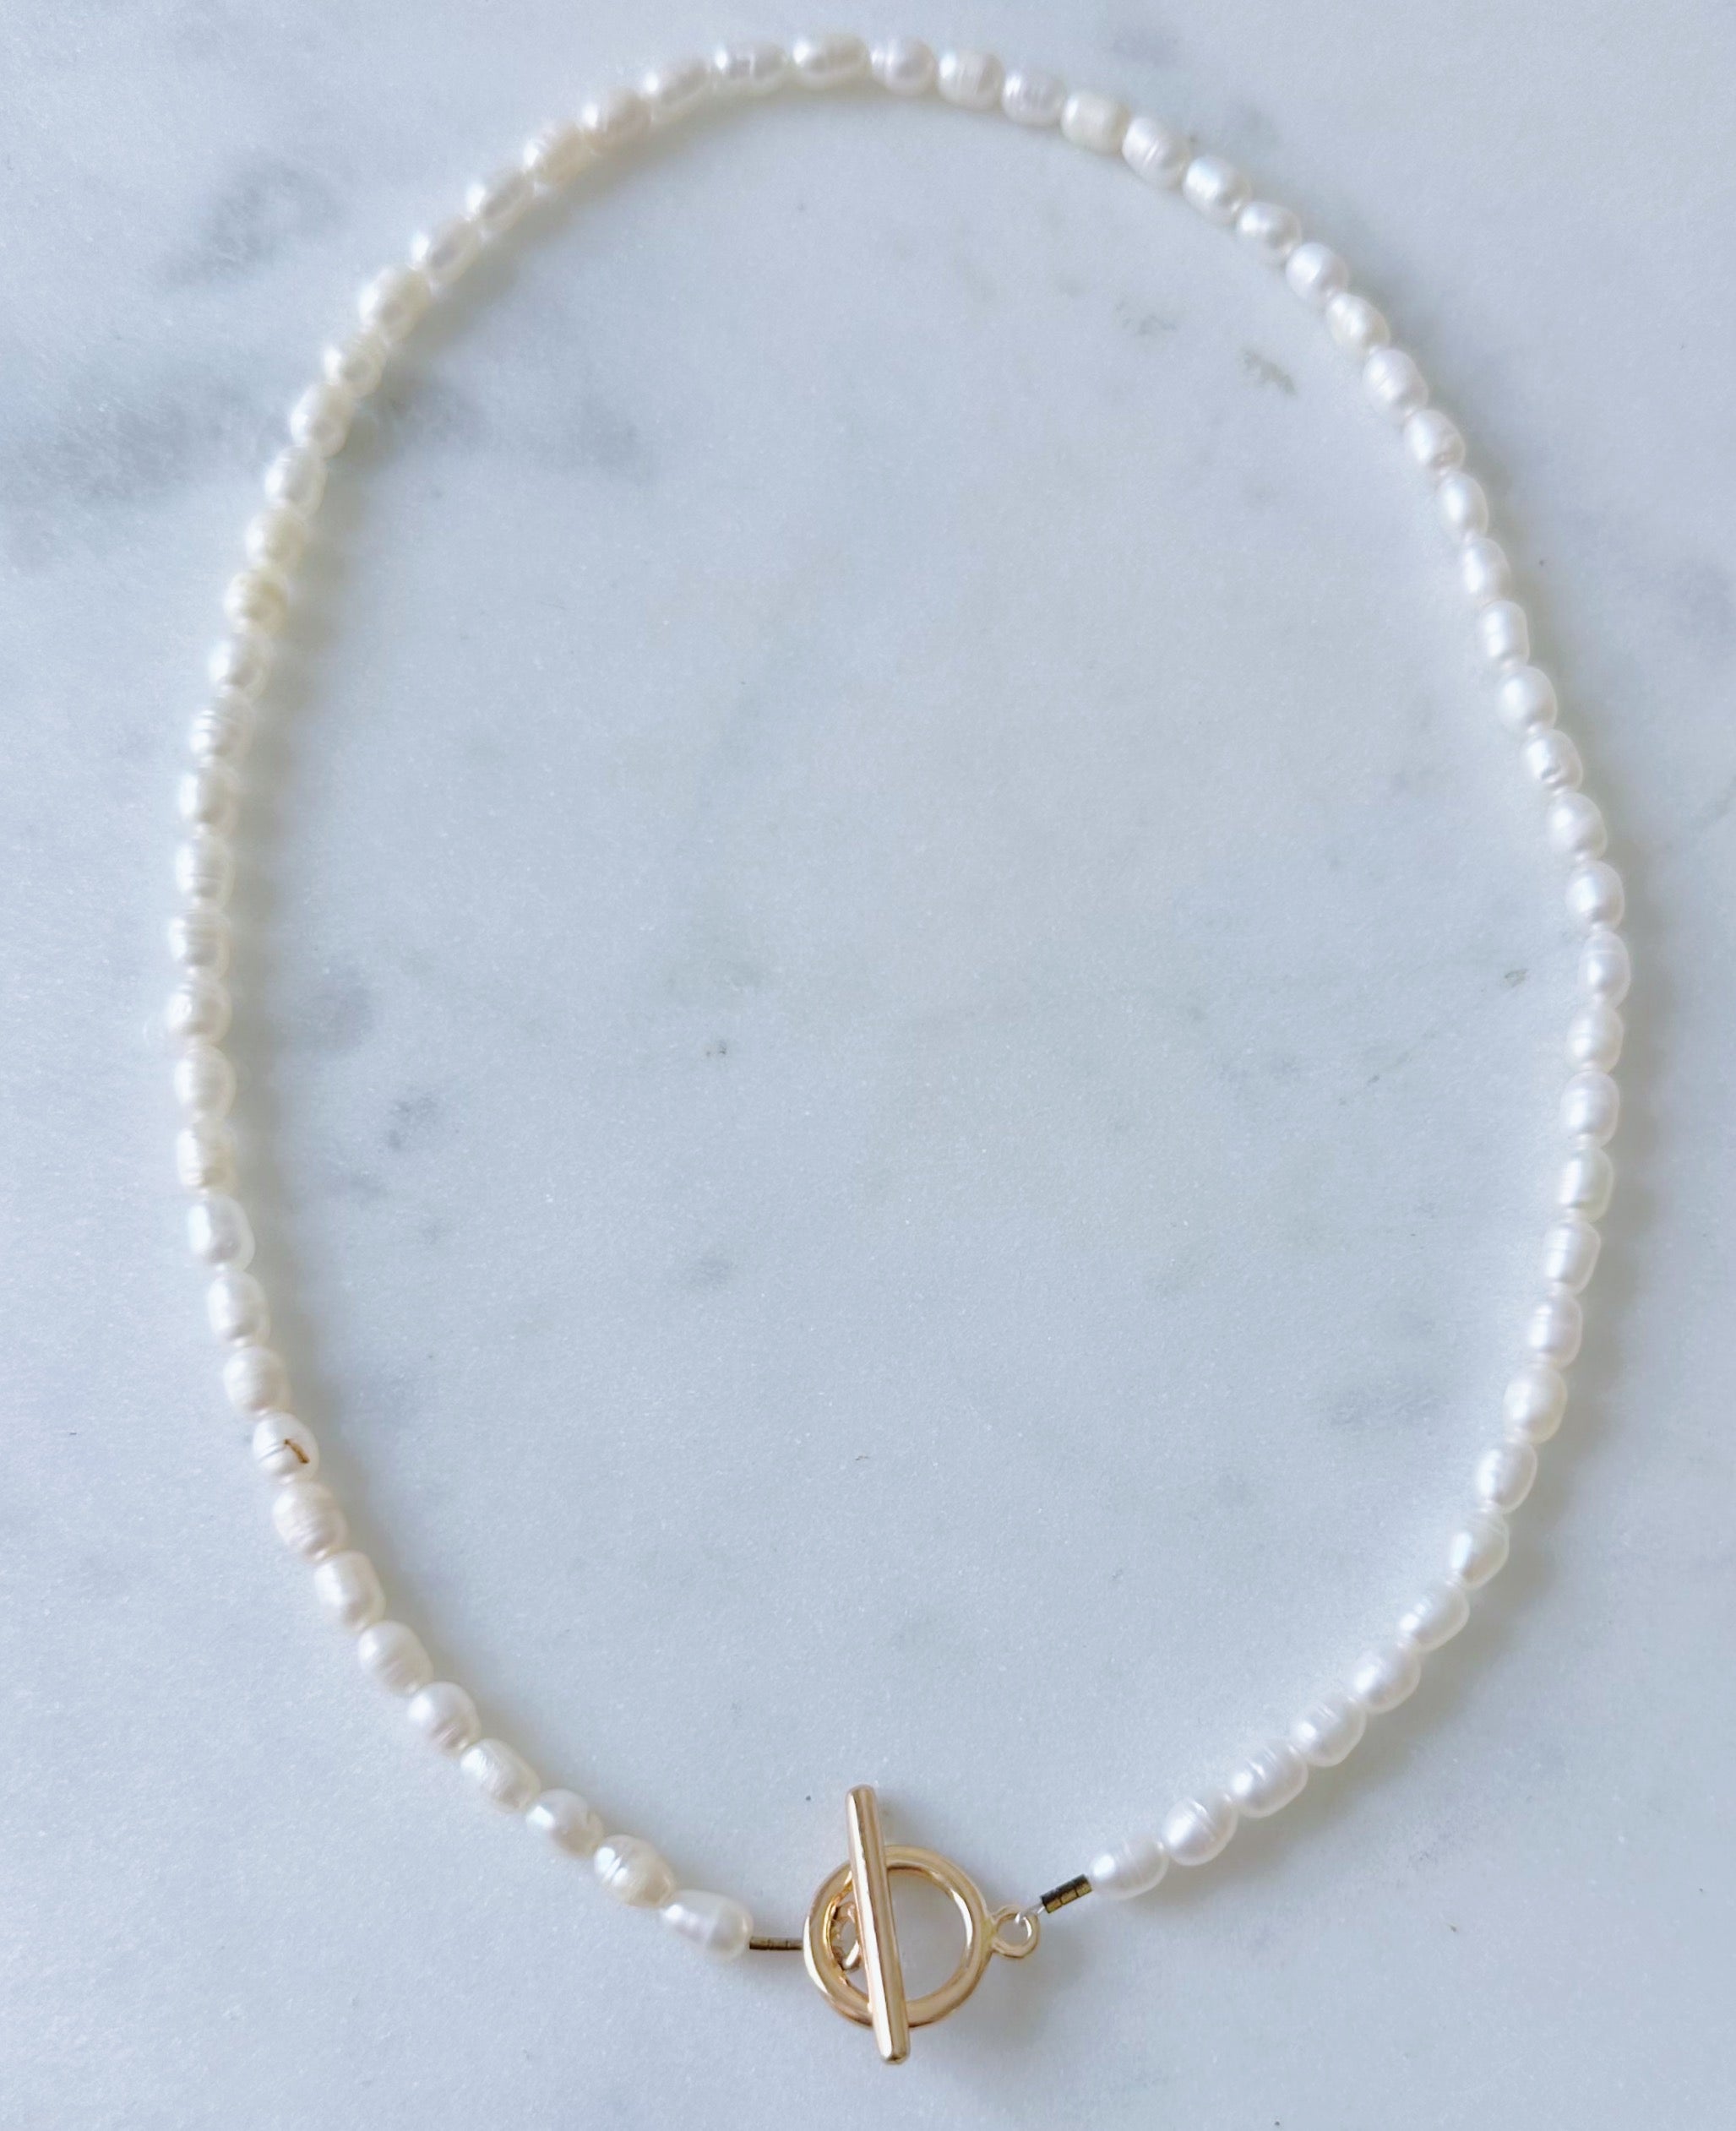 Handmade Rose Quartz Pendant Toggle Chain Necklace